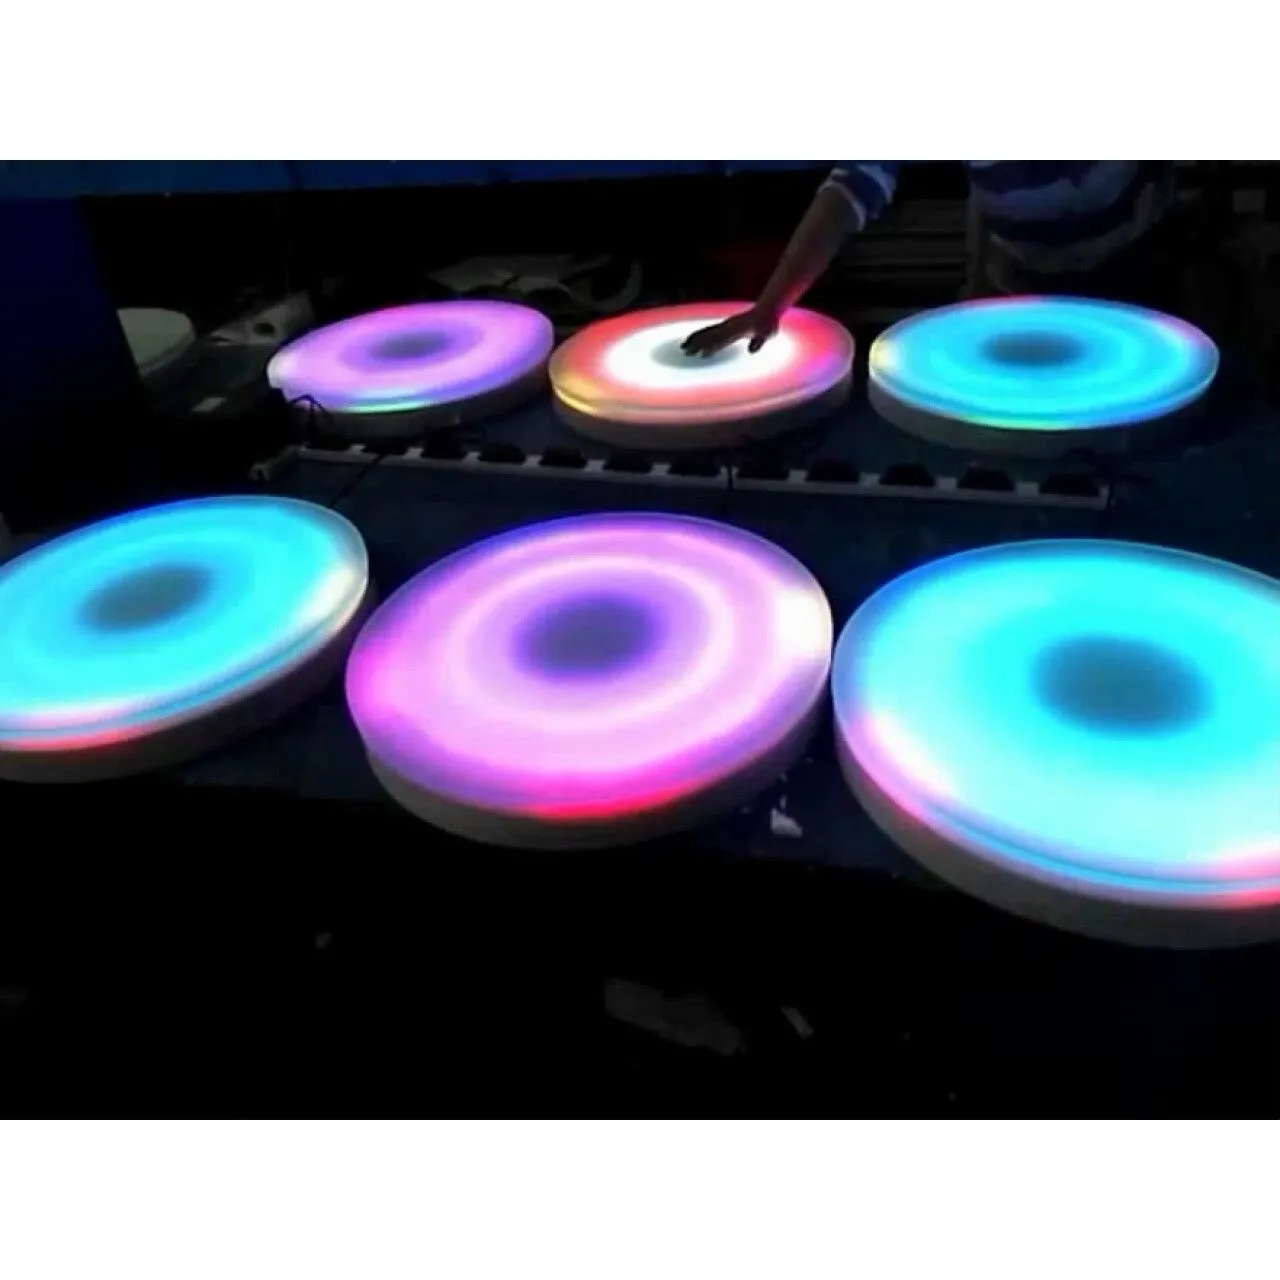 GlowMotion Platte | Taktile Lichtplatte